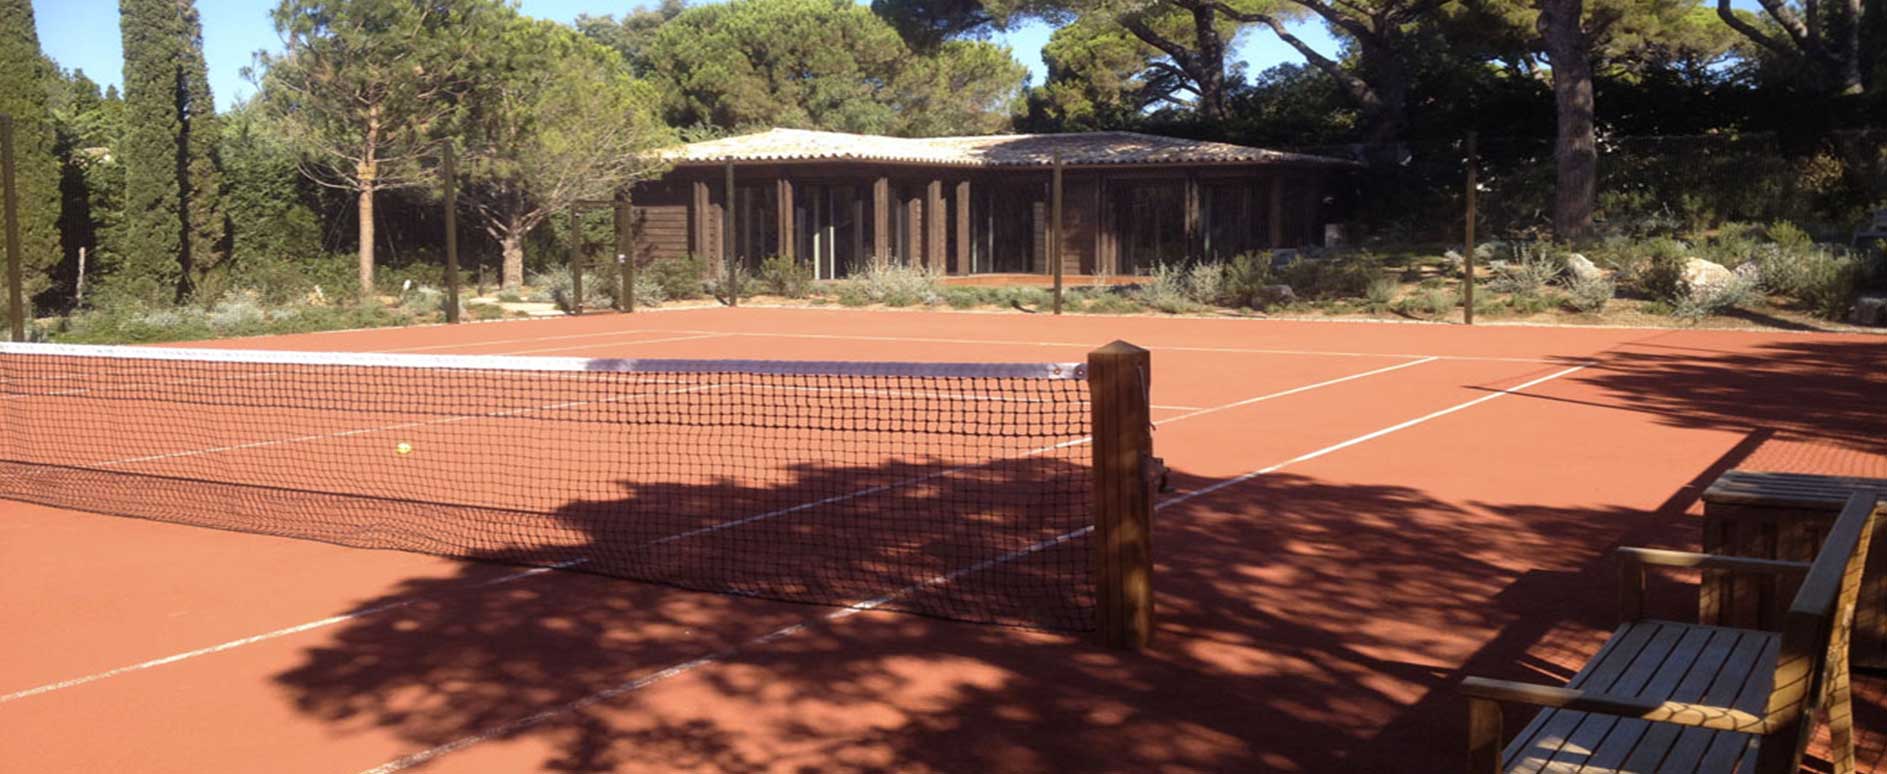 Construction terrain de tennis terre battue synthétique